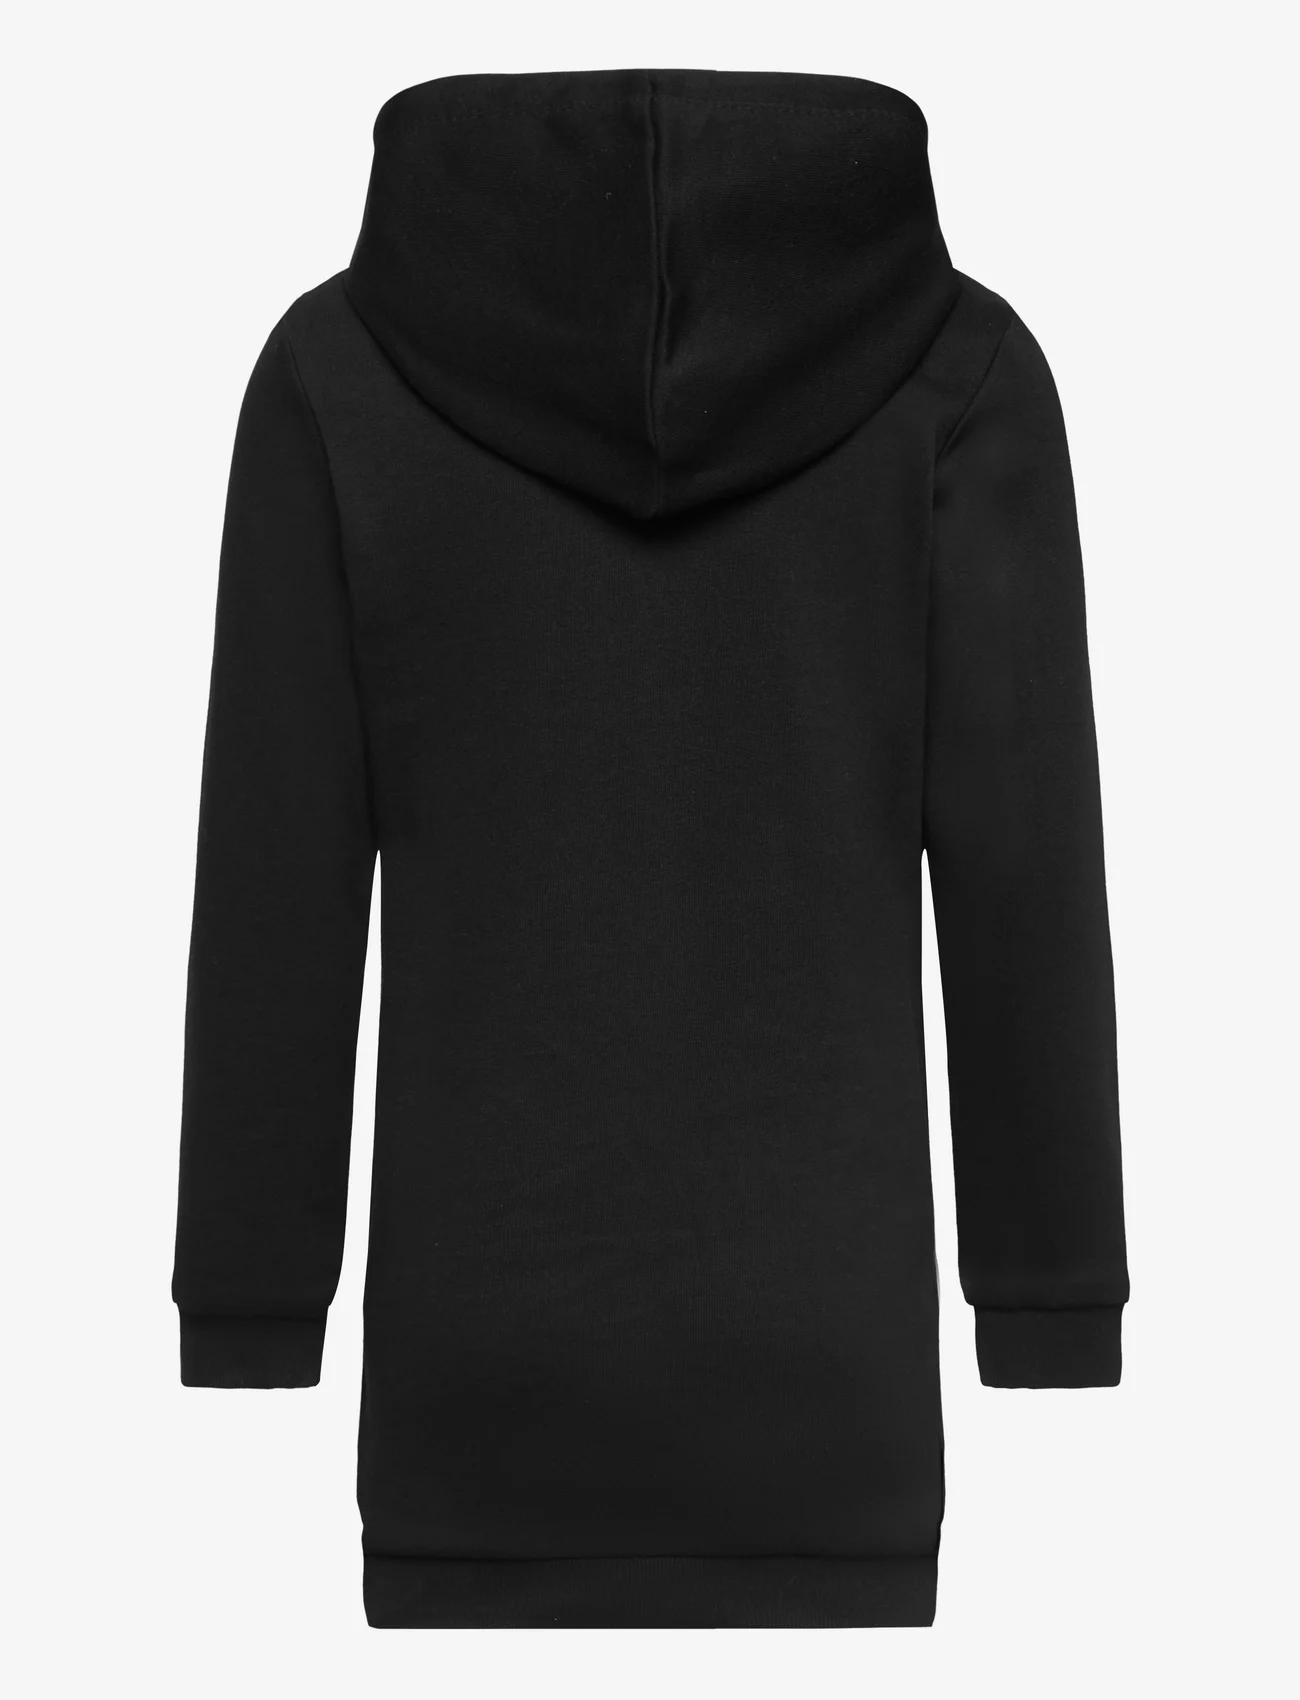 PUMA - Hooded Dress G - laisvalaikio suknelės ilgomis rankovėmis - puma black - 1